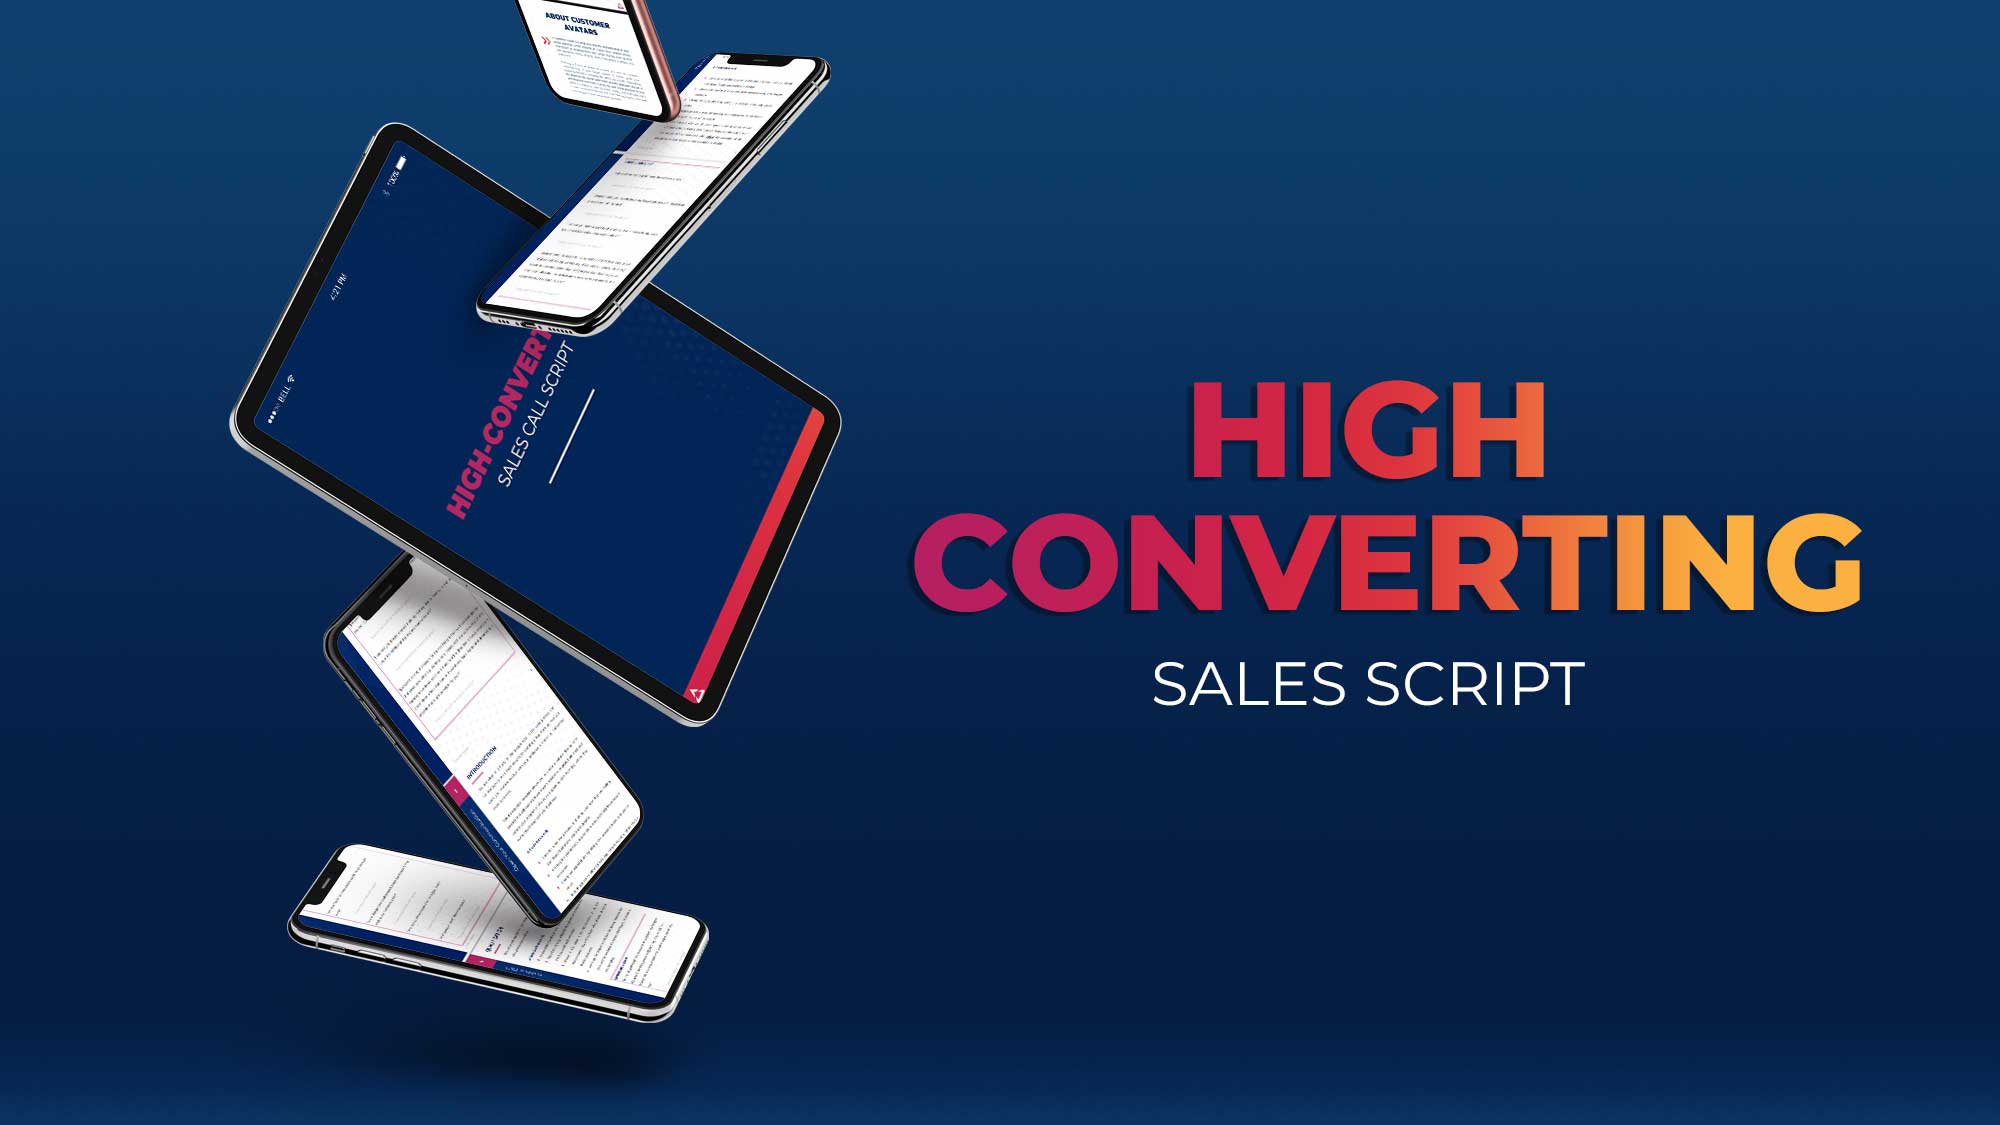 HighConvertingSalesScript